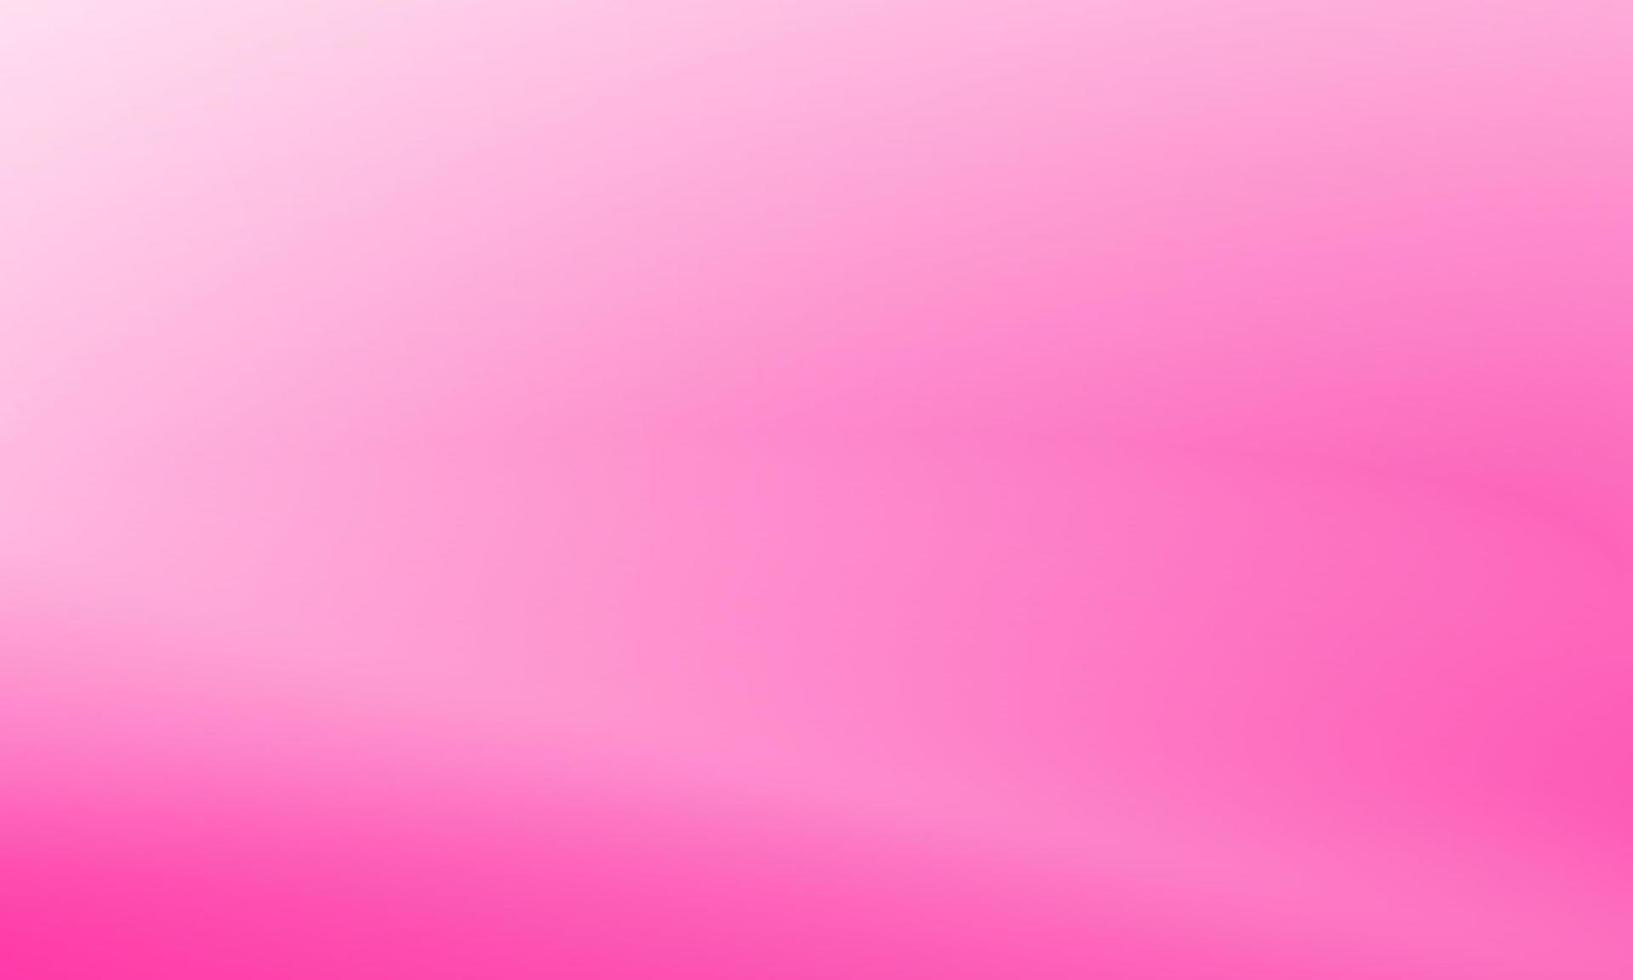 Beautiful pink color gradient background vector